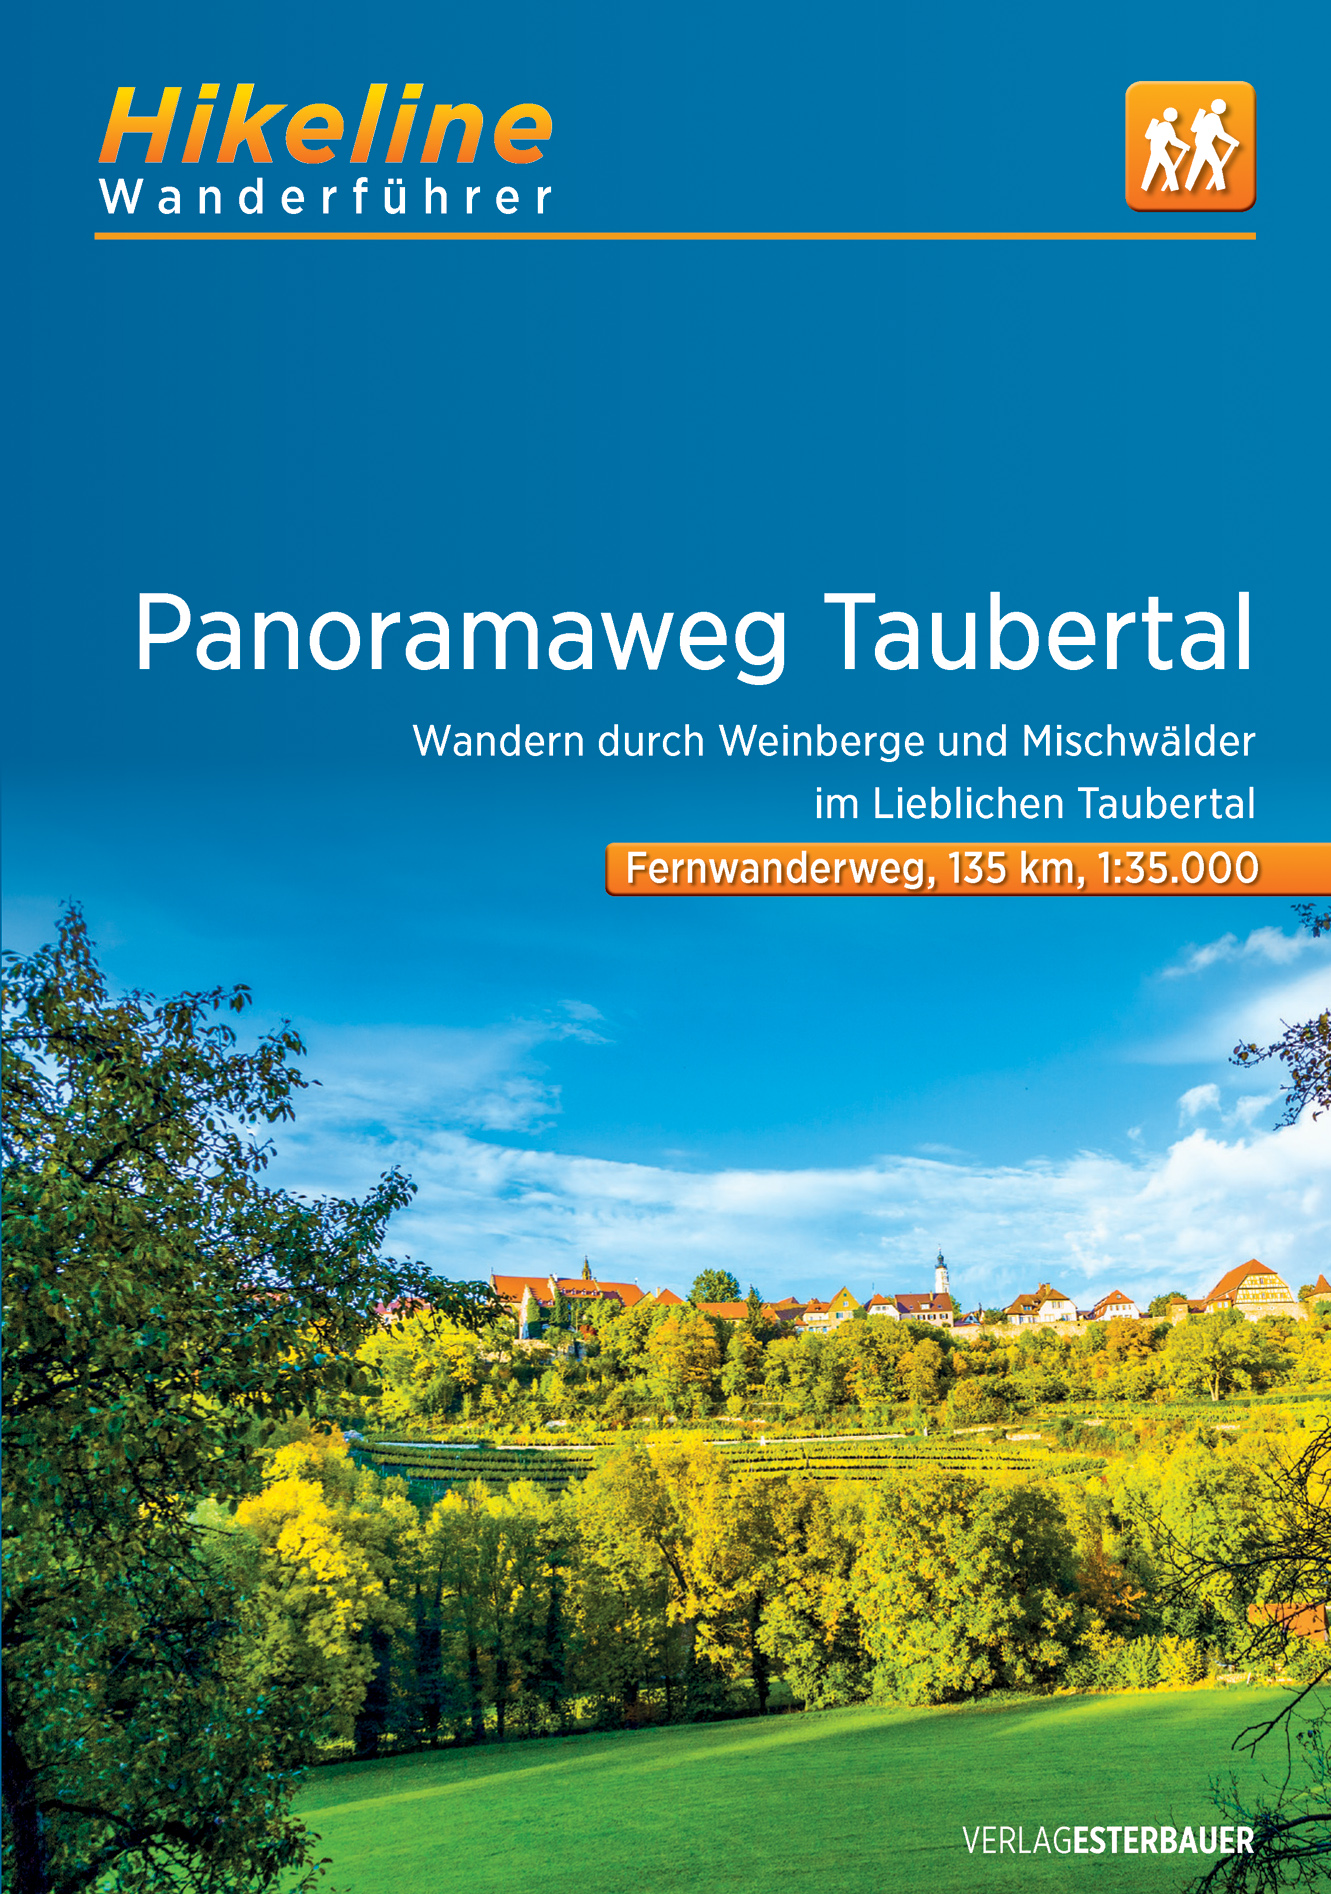 Online bestellen: Wandelgids Hikeline Fernwanderweg Panoramaweg Taubertal | Esterbauer